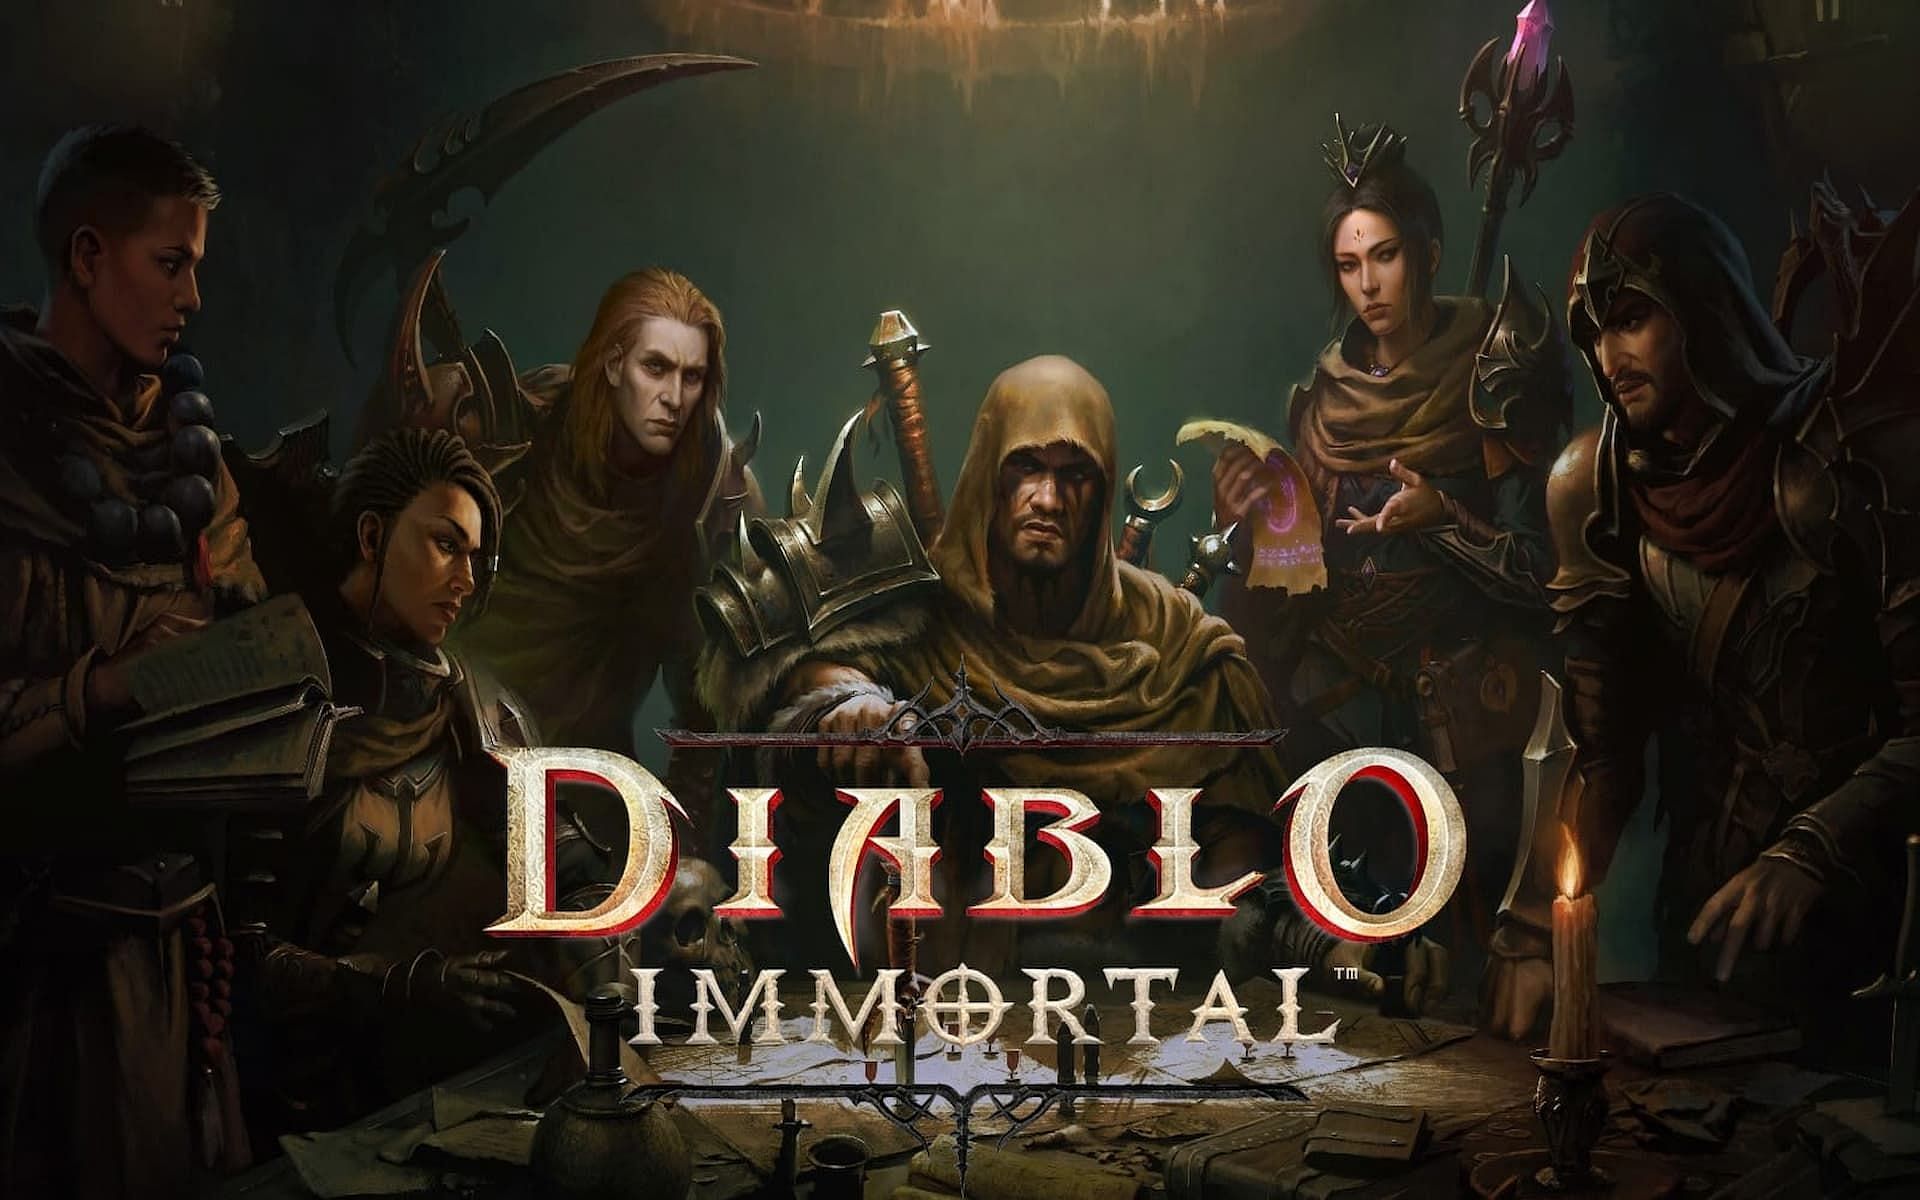 Is Diablo Immortal pay-to-win?